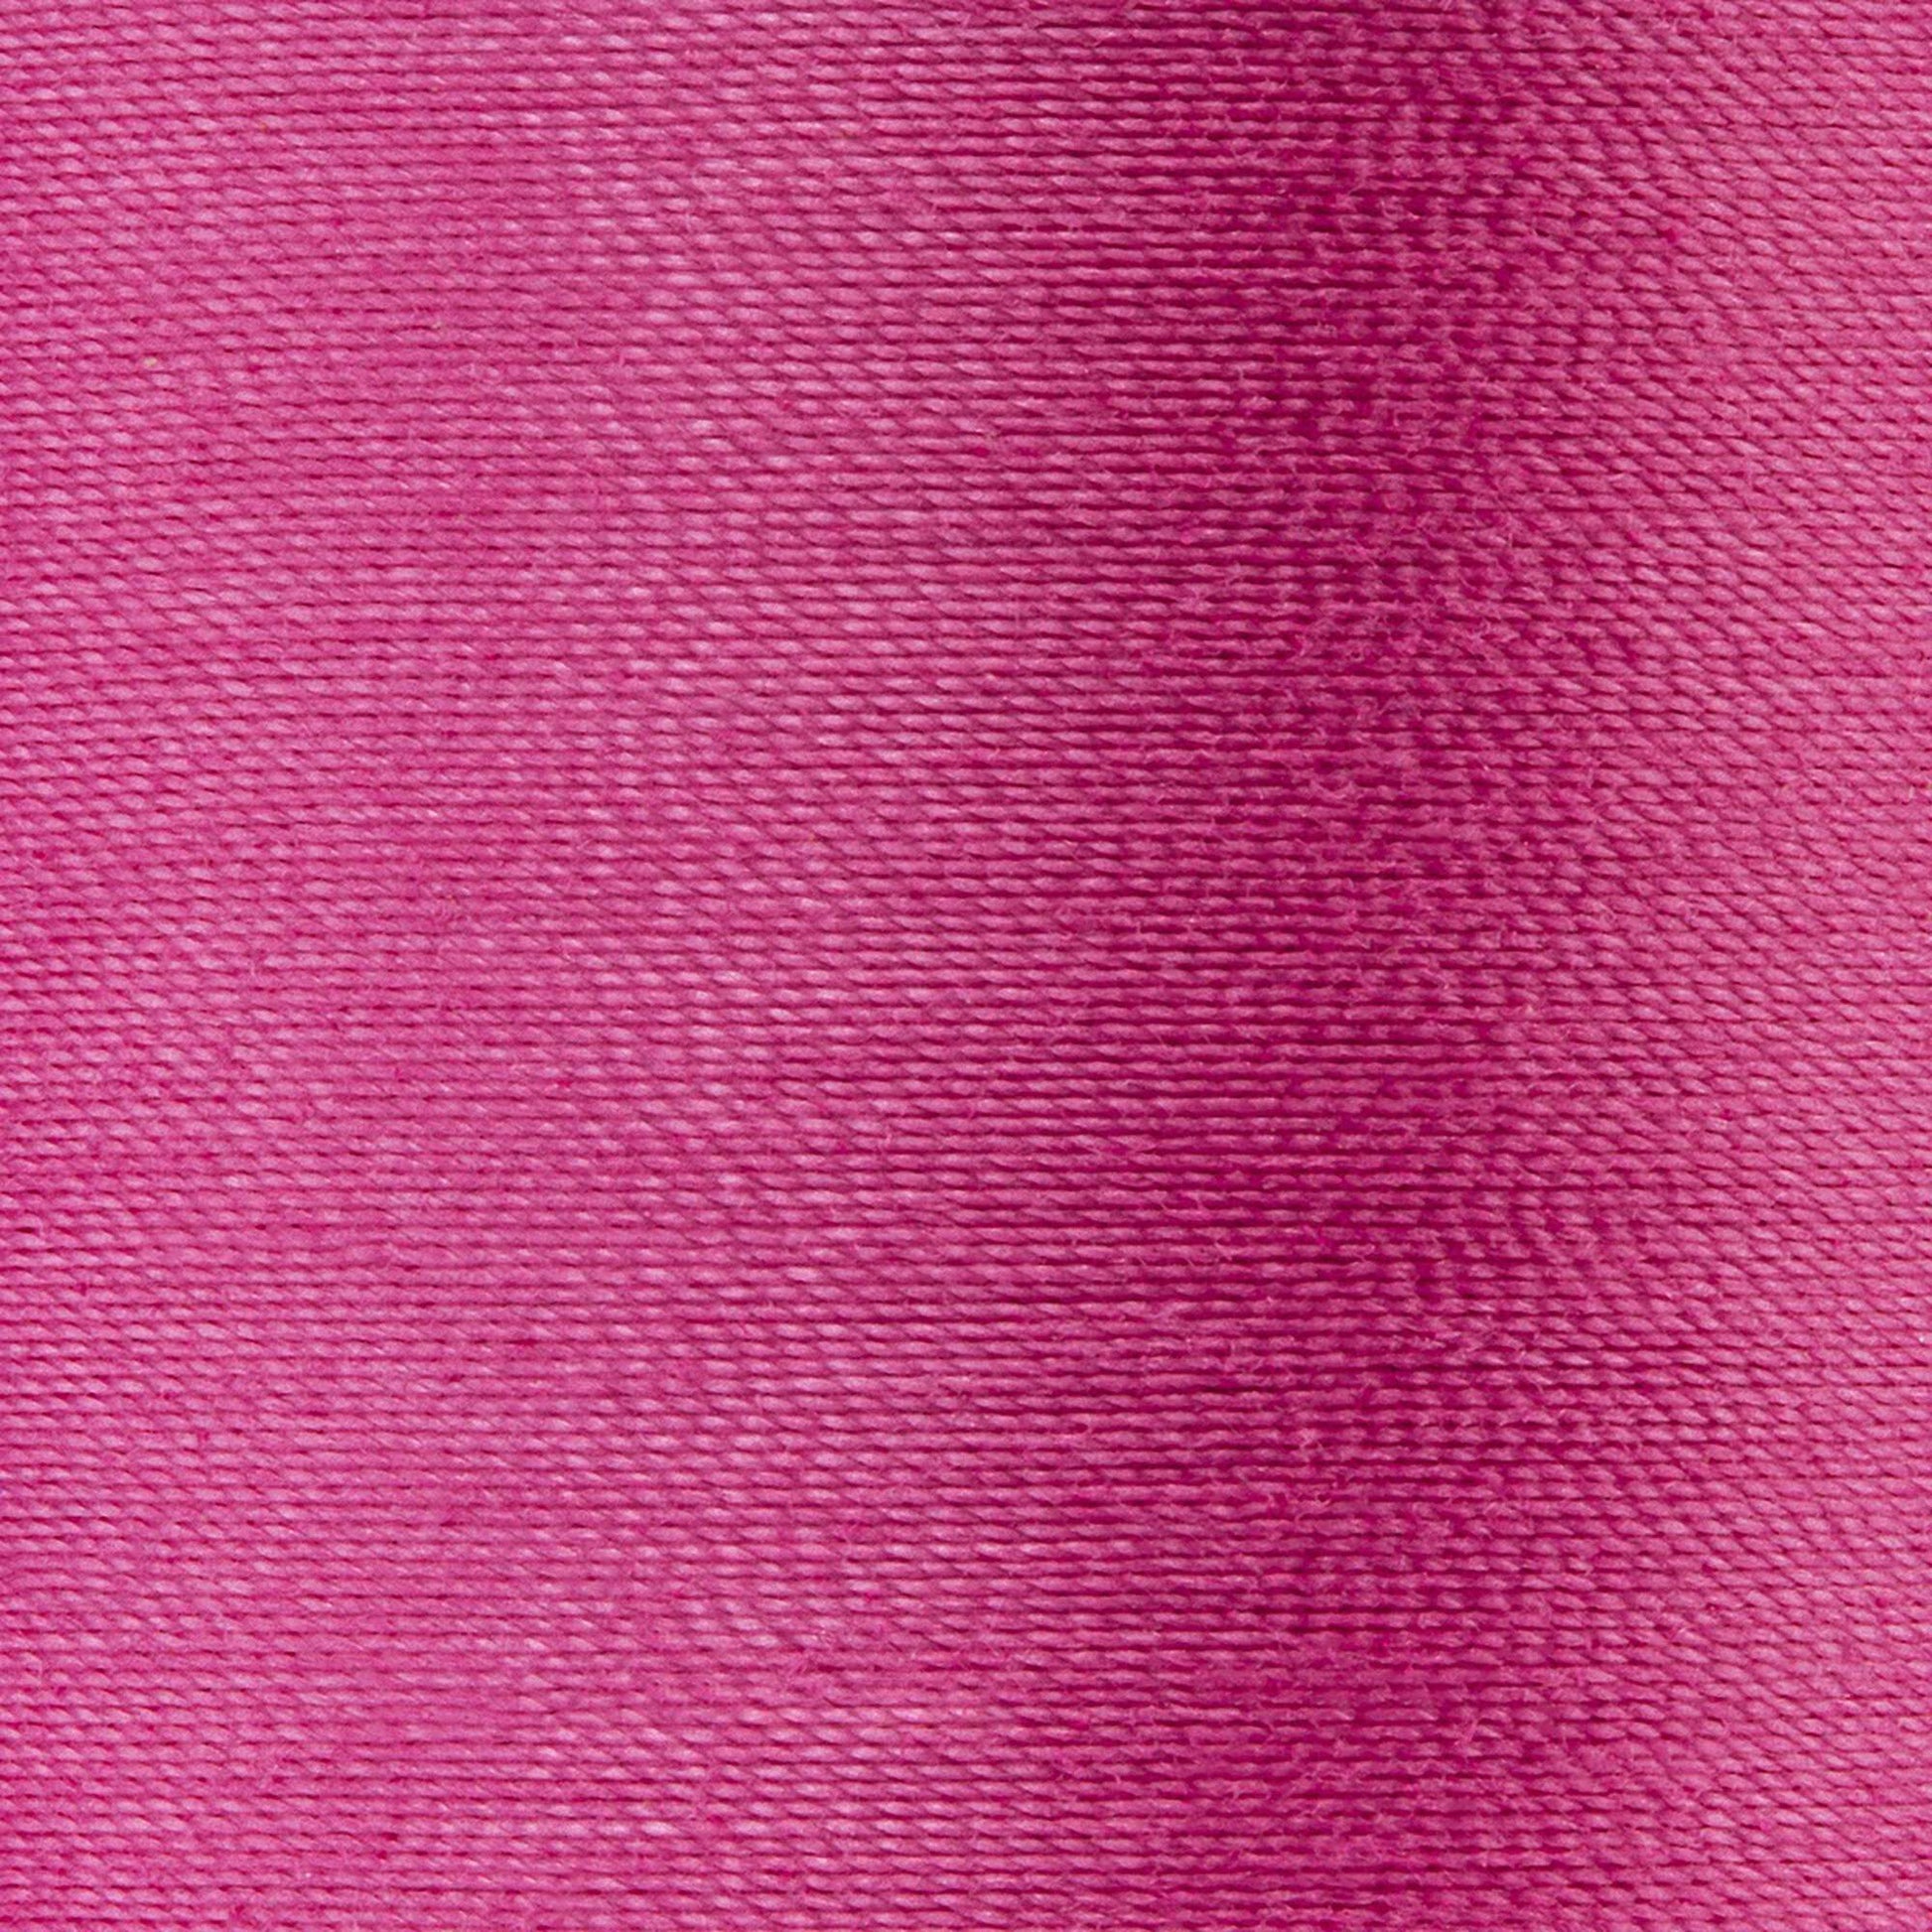 Coats & Clark All Purpose Thread (500 Yards) Hot Pink